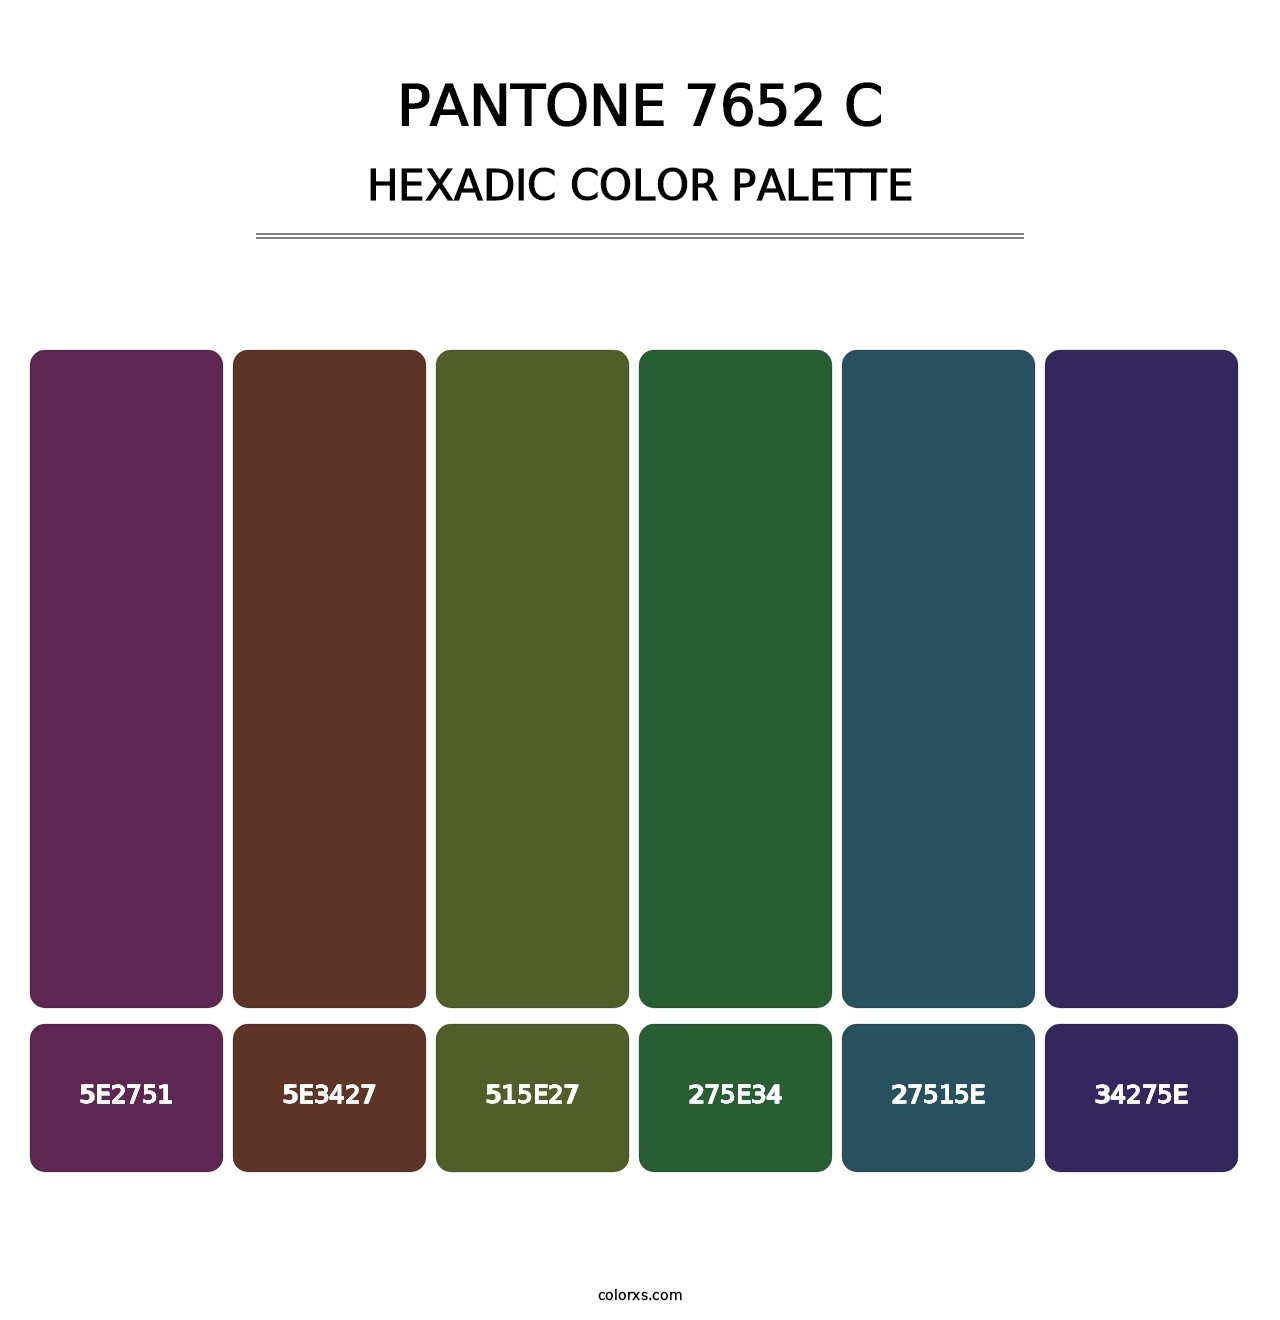 PANTONE 7652 C - Hexadic Color Palette